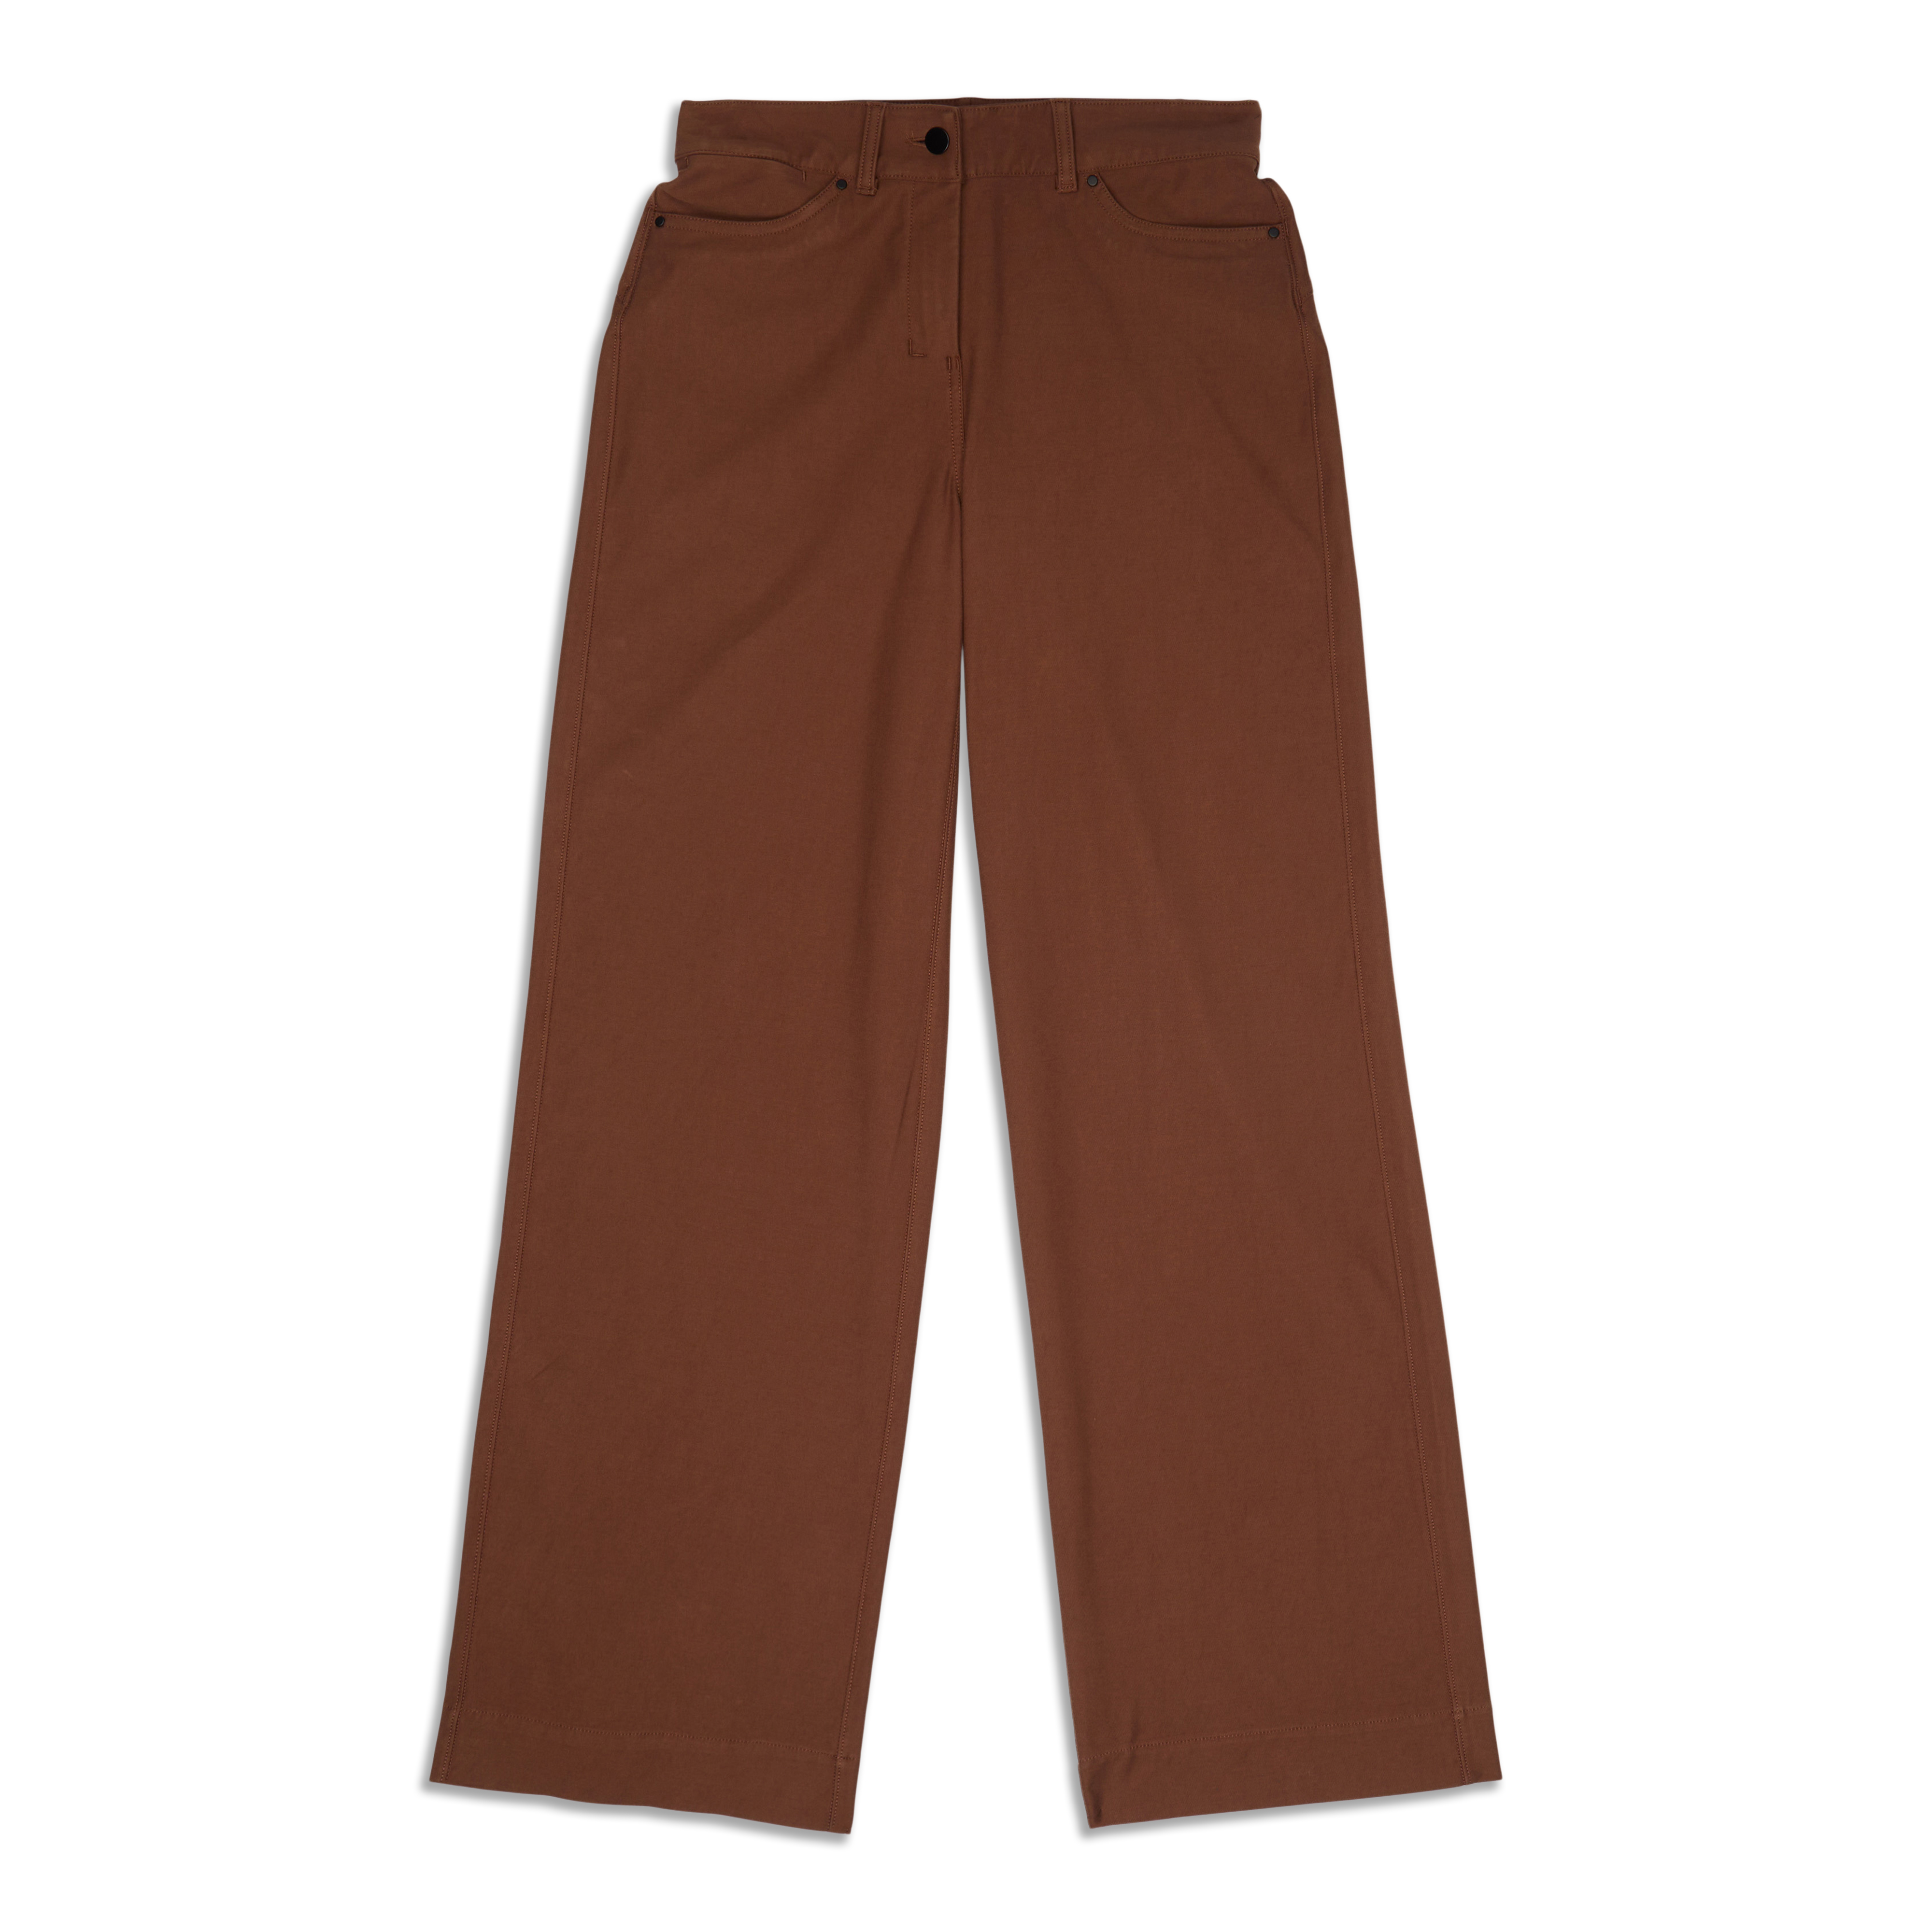 City Sleek 5 Pocket Wide-Leg High Rise 7/8 Length Pant